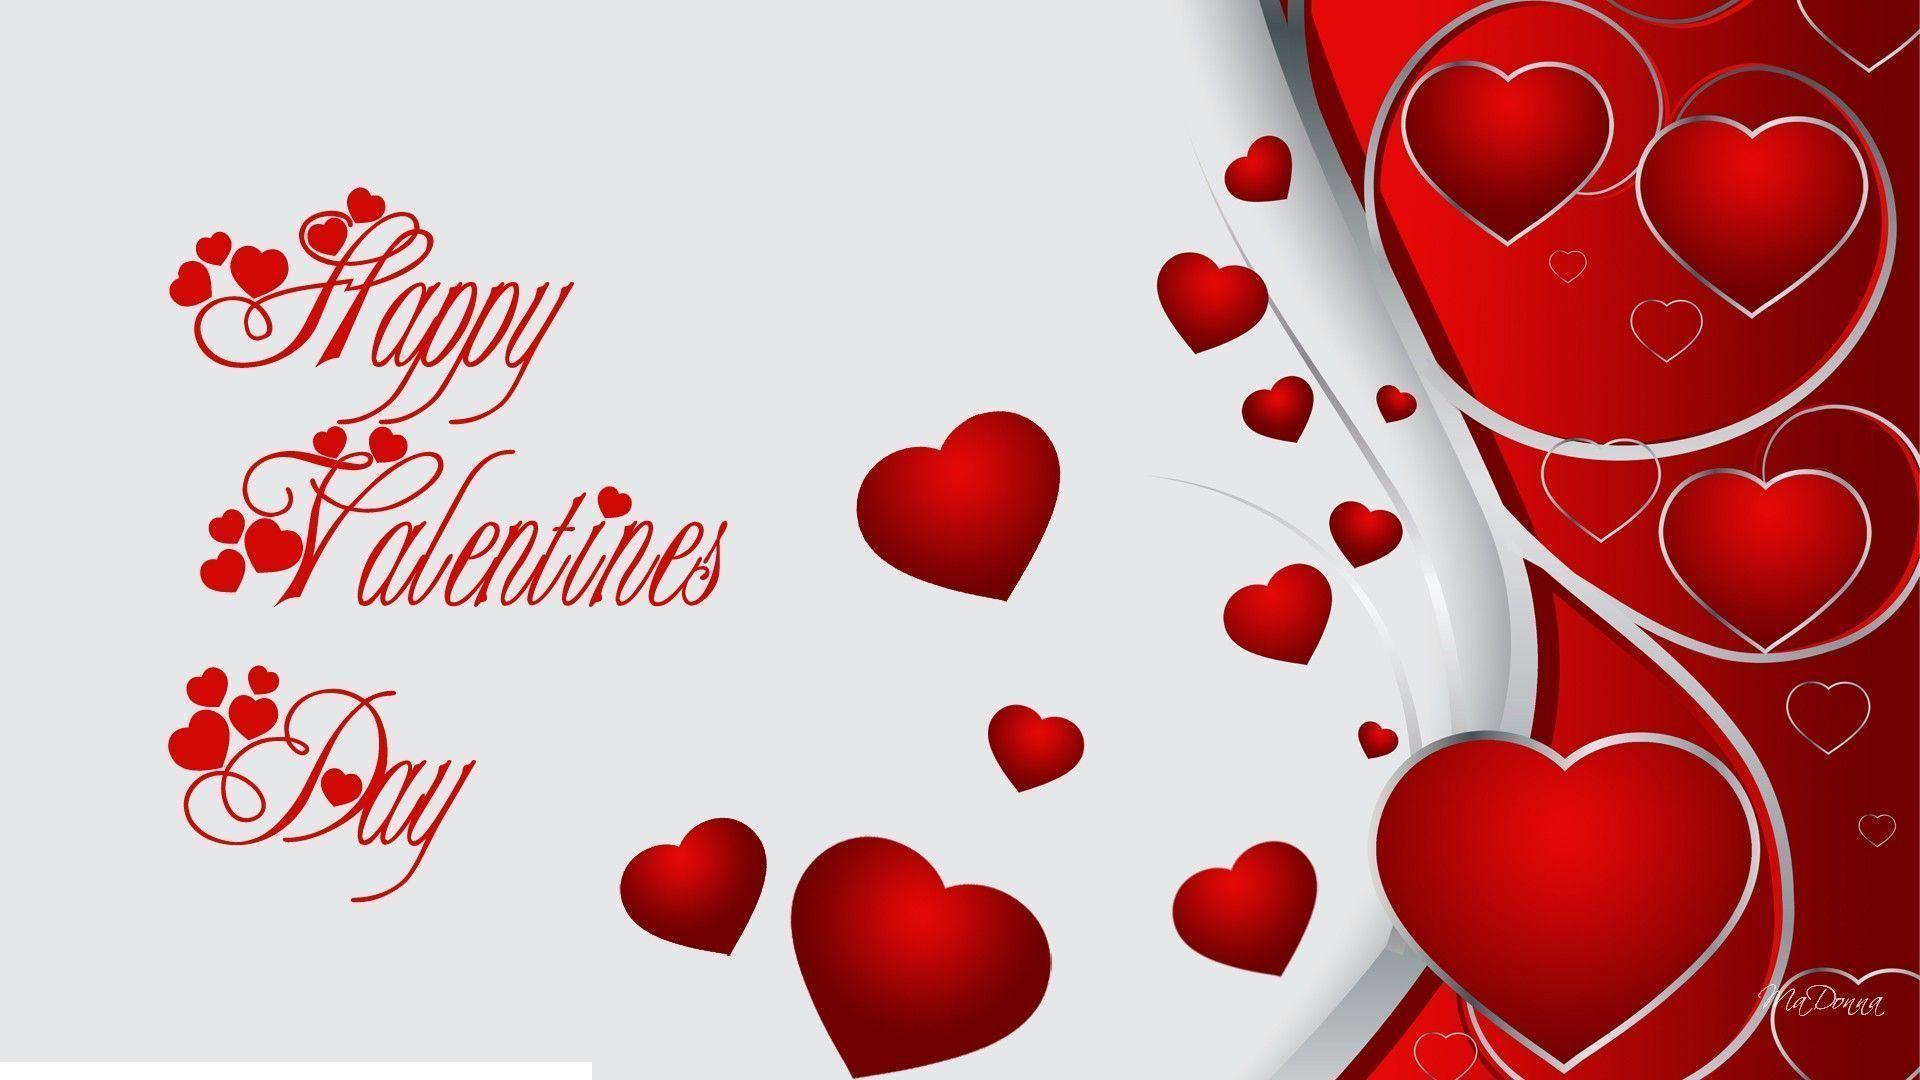 love heart happy valentines day 2015 Wallpaper. HD Wallpaper